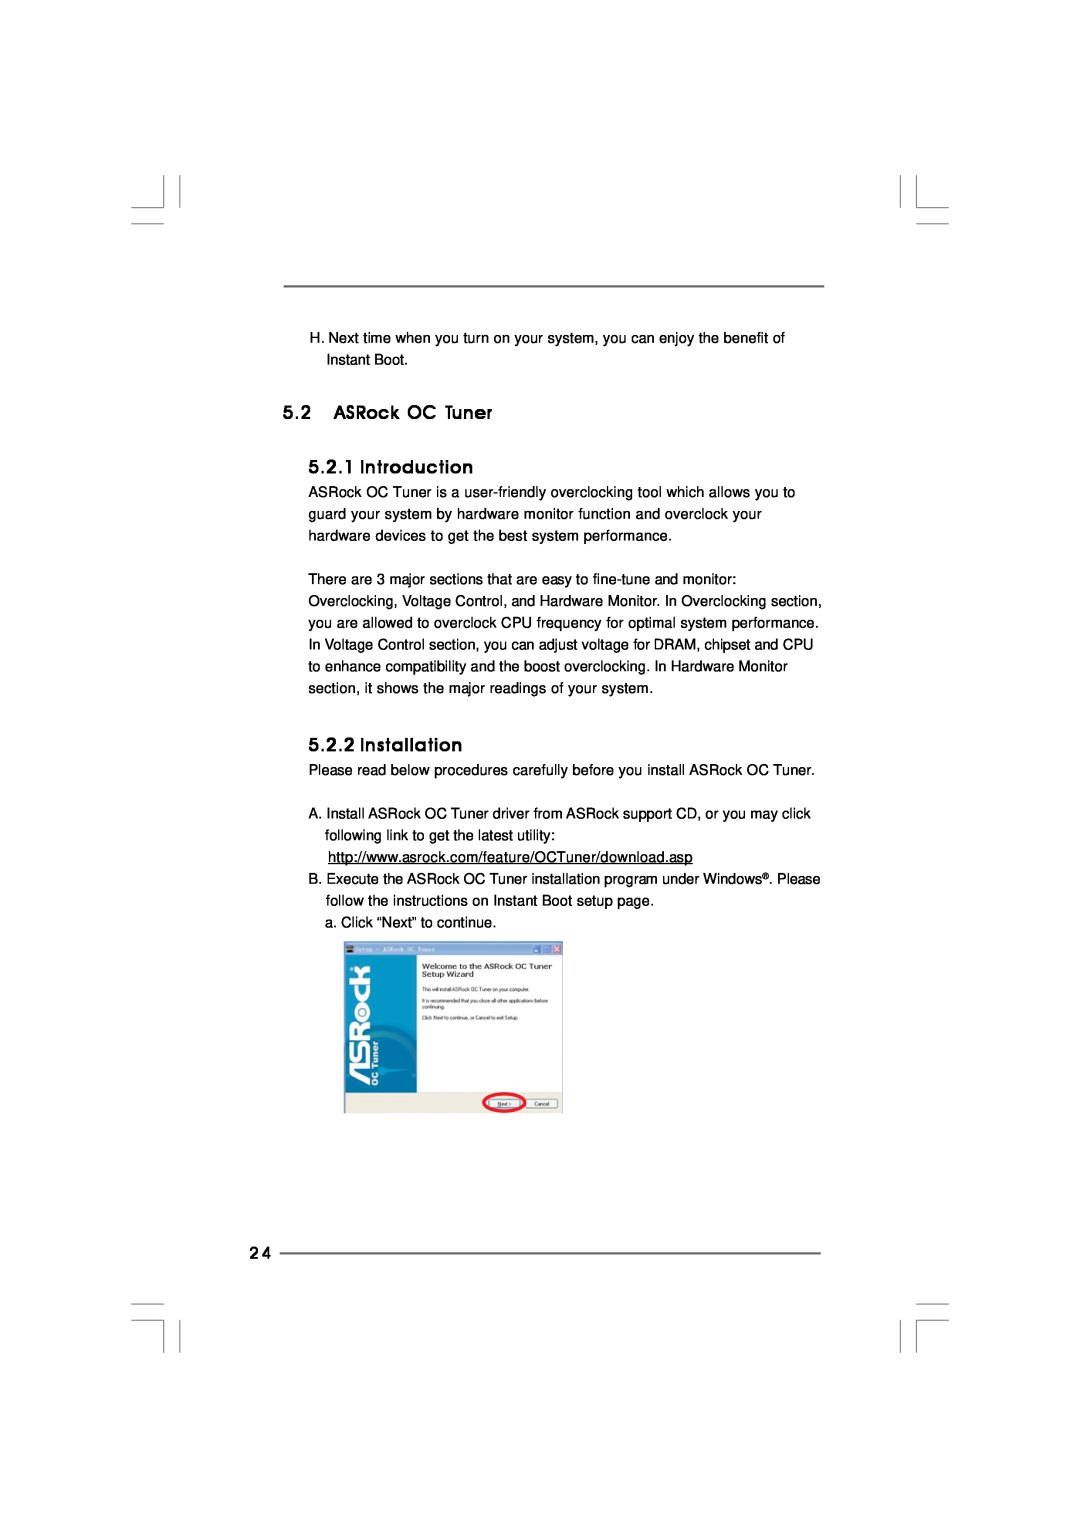 ASRock ION 3D Series manual ASRock OC Tuner 5.2.1 Introduction, Installation 